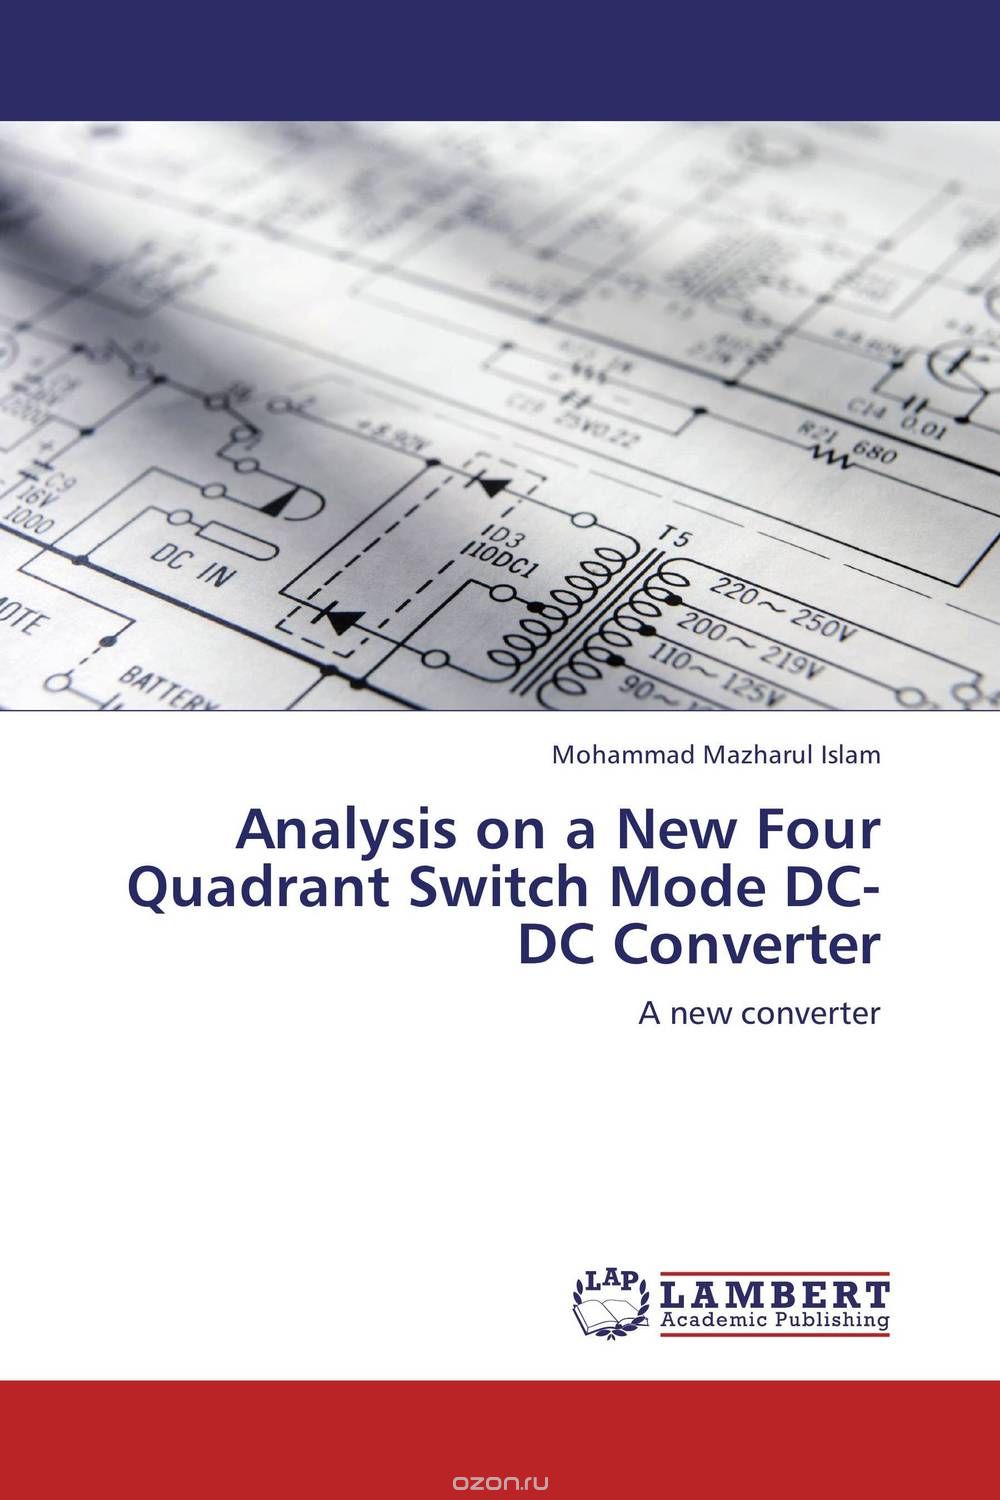 Скачать книгу "Analysis on a New Four Quadrant Switch Mode DC-DC Converter"